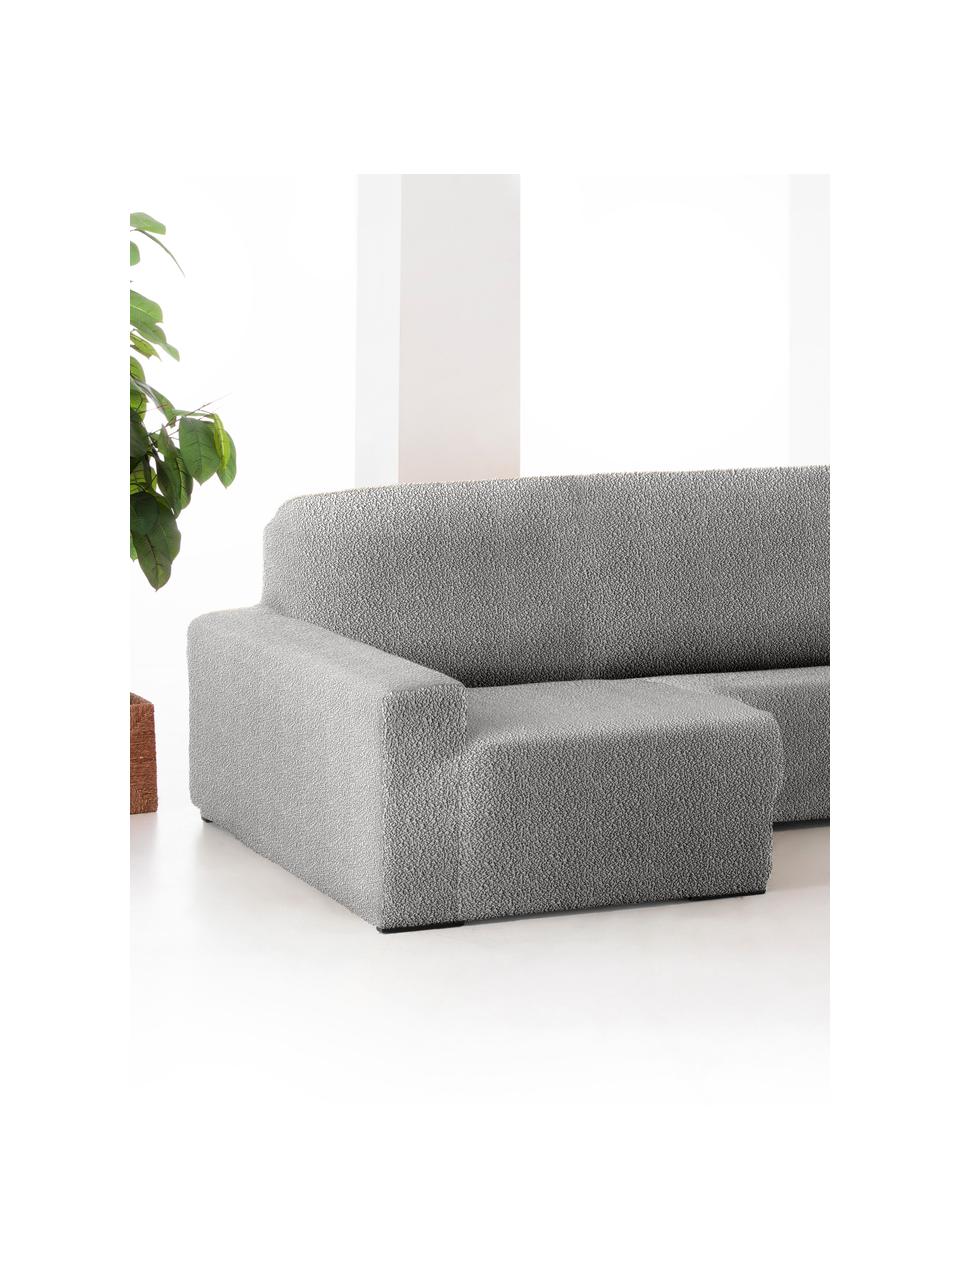 Copertura divano angolare Roc, 55% poliestere, 35% cotone, 10% elastomero, Grigio, Larg. 360 x Alt. 180 cm, chaise-longue a destra